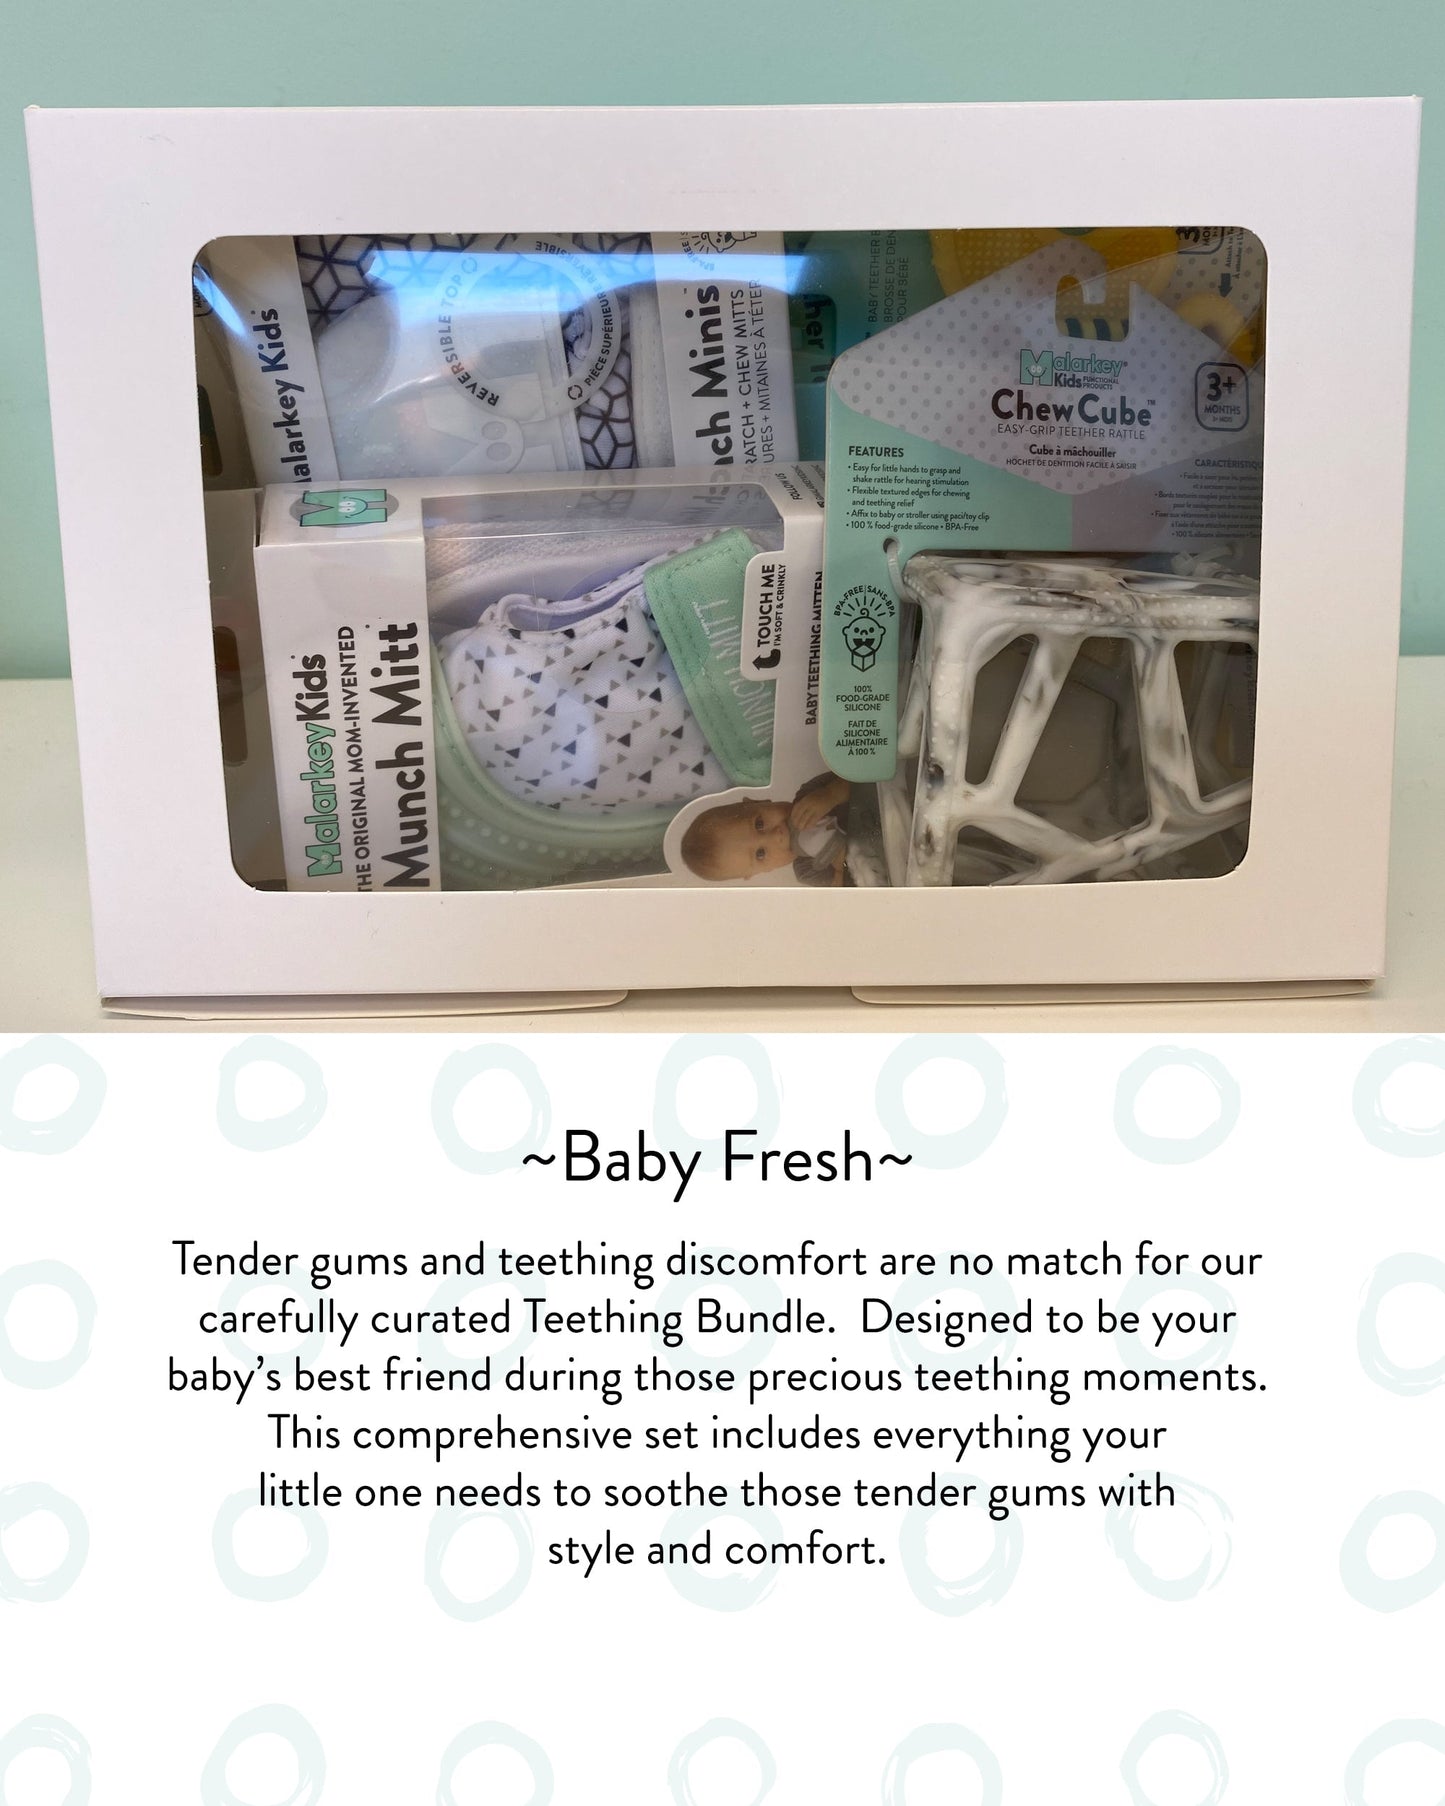 Teething Bundle Gift Pack - Baby Fresh Bundle Malarkey Kids 